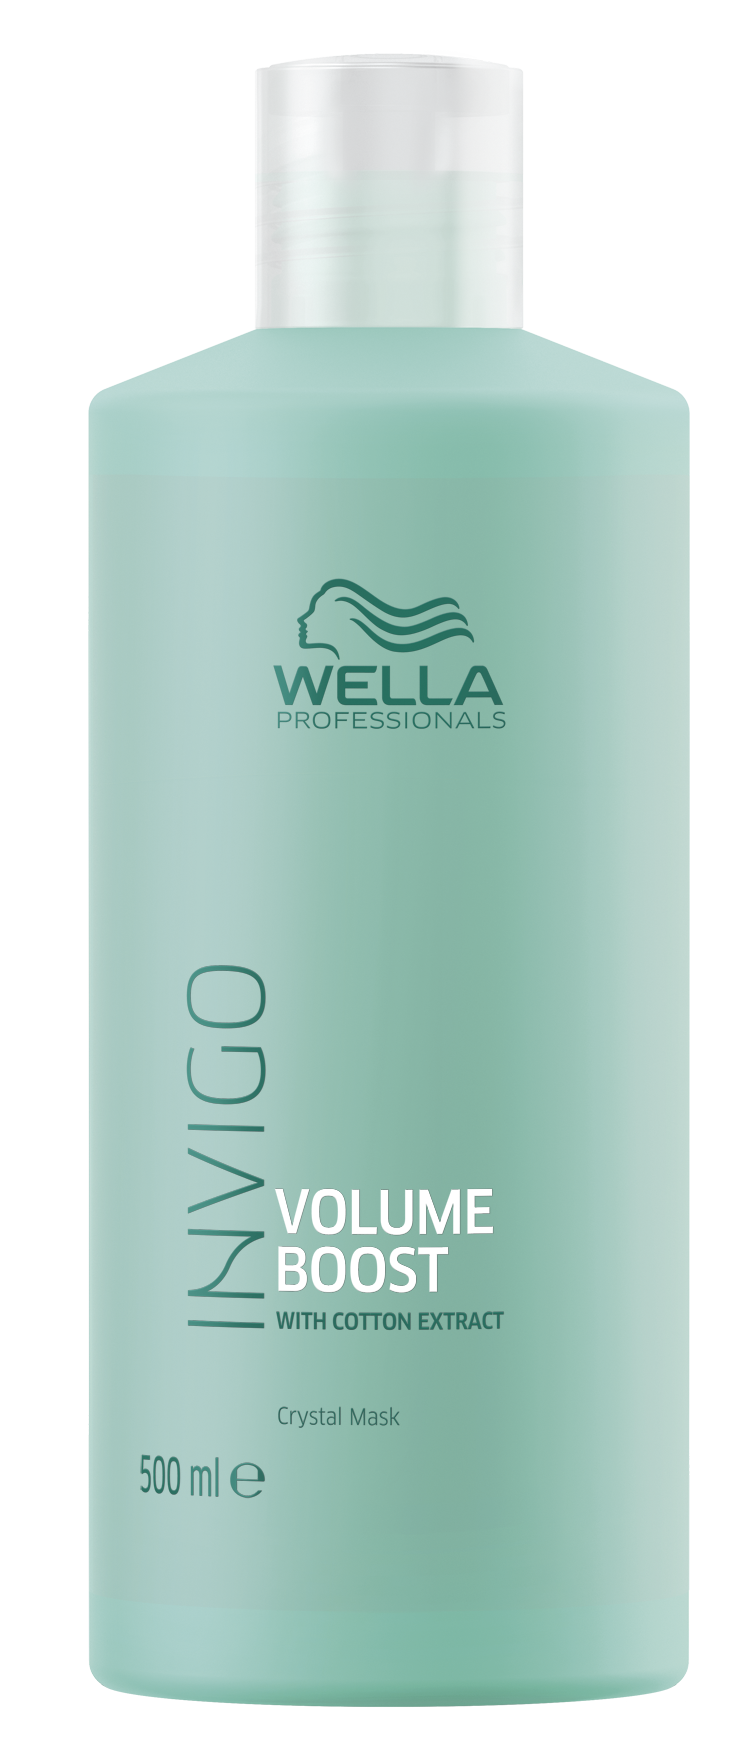 WELLA PROFESSIONALS Маска-кристалл уплотняющая / Volume Boost 500 мл tefia маска уплотняющая для тонких волос mycare volume 250 мл